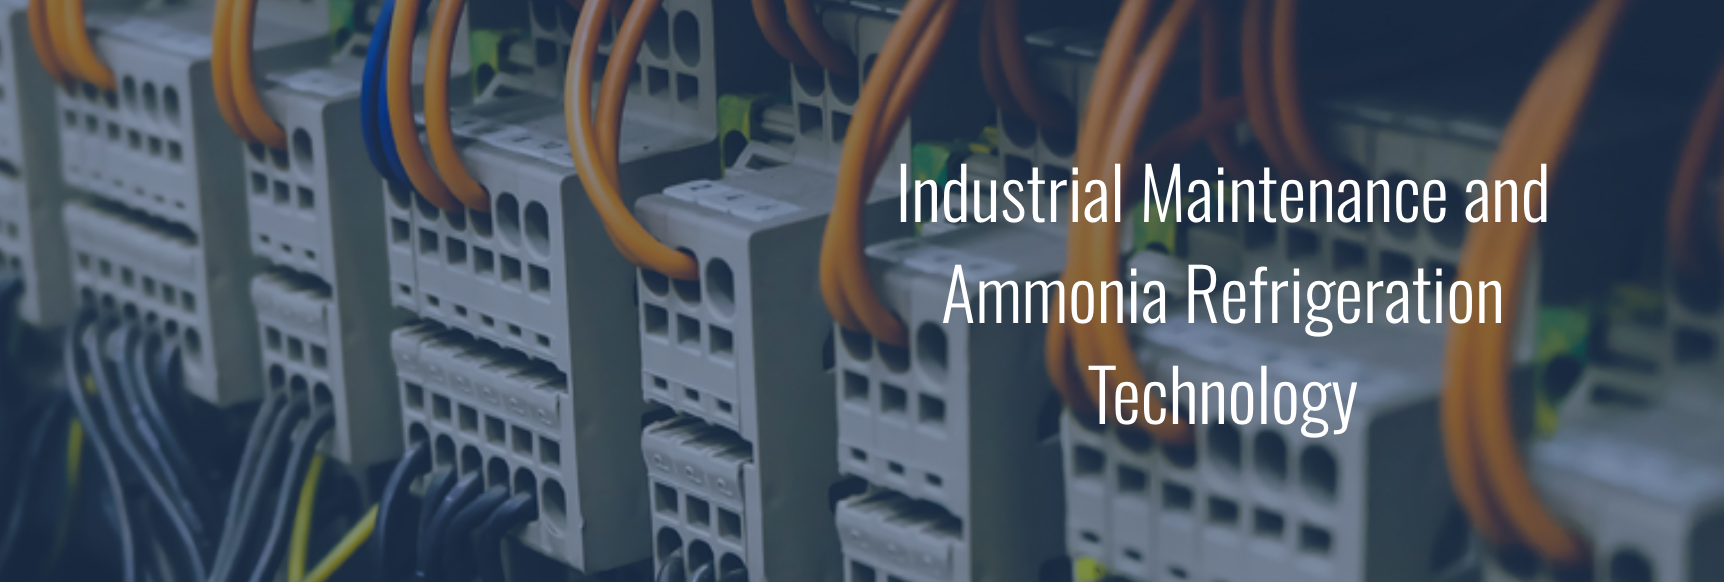 Industrial Maintenance and Ammonia Refrigeration Technology